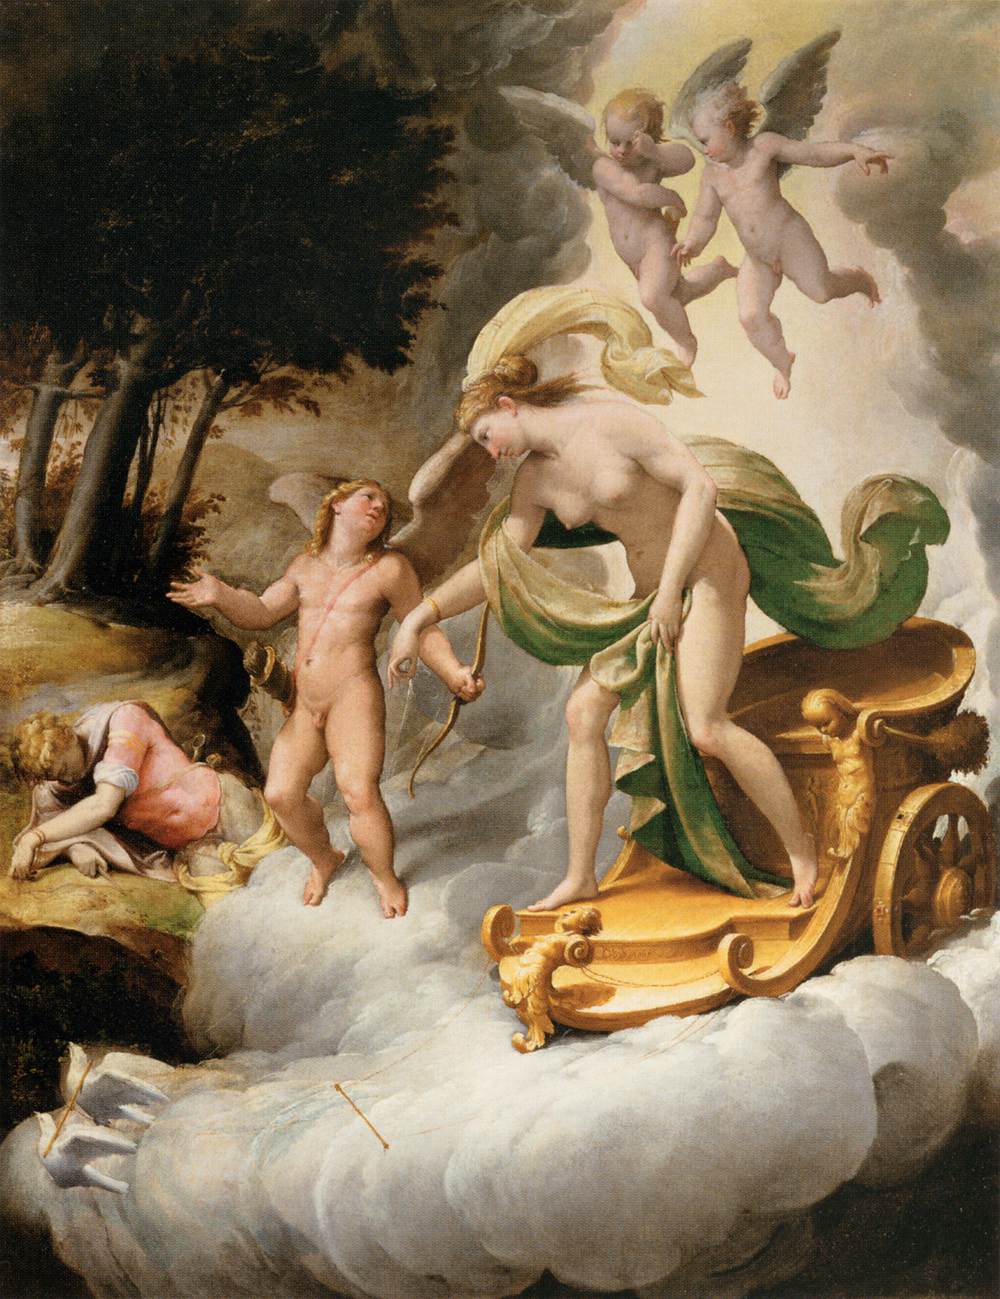 Venus reżyseria przez Cupid do Dead Adonis